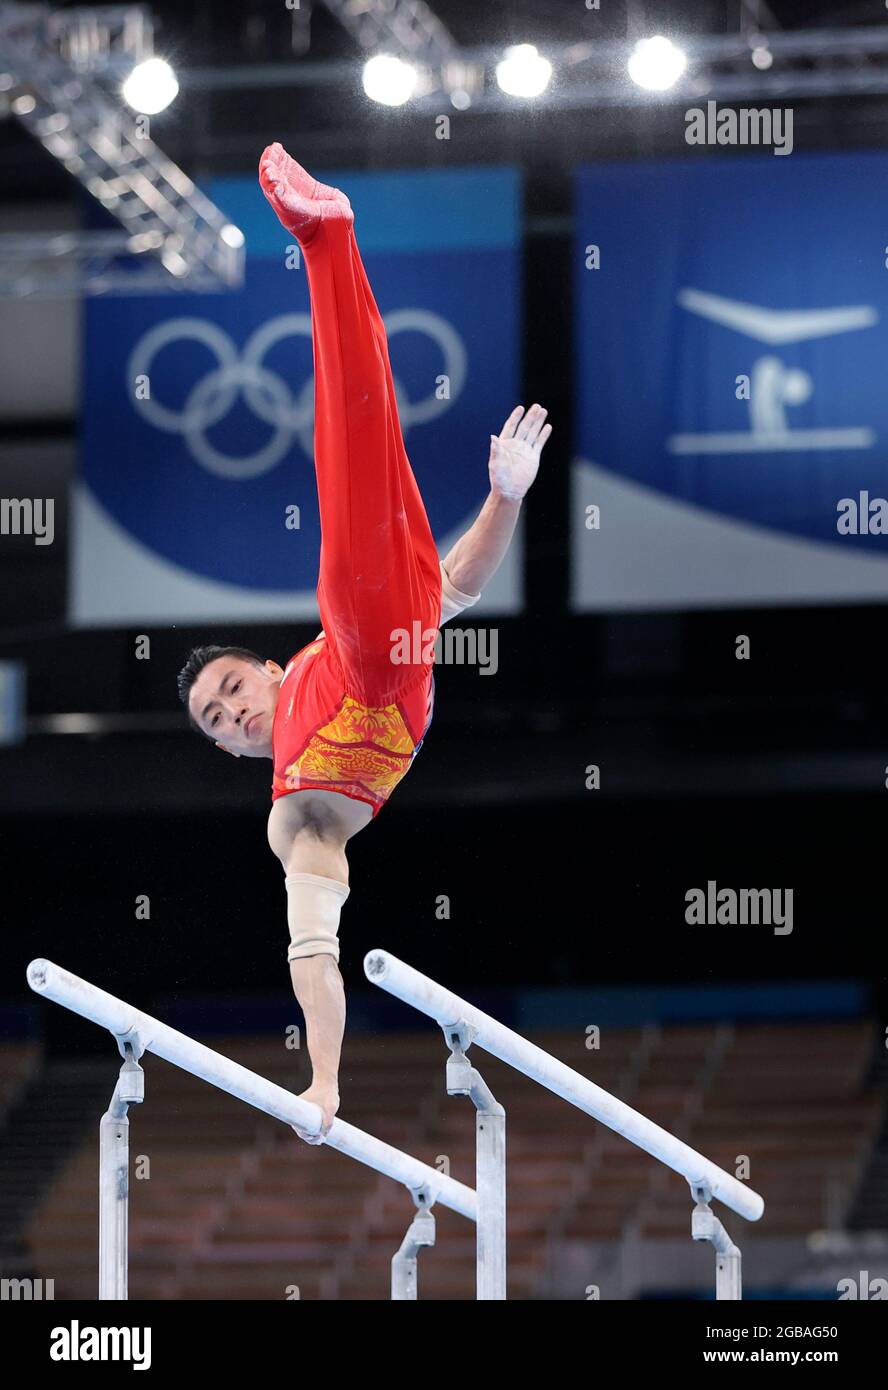 (210803) -- TOKIO, 3. August 2021 (Xinhua) -- Zou Jingyuan aus China tritt während des Finales der Männer im Kunstturnen bei den Olympischen Spielen 2020 in Tokio, Japan, am 3. August 2021 an. (Xinhua/Zheng Huansong) Stockfoto